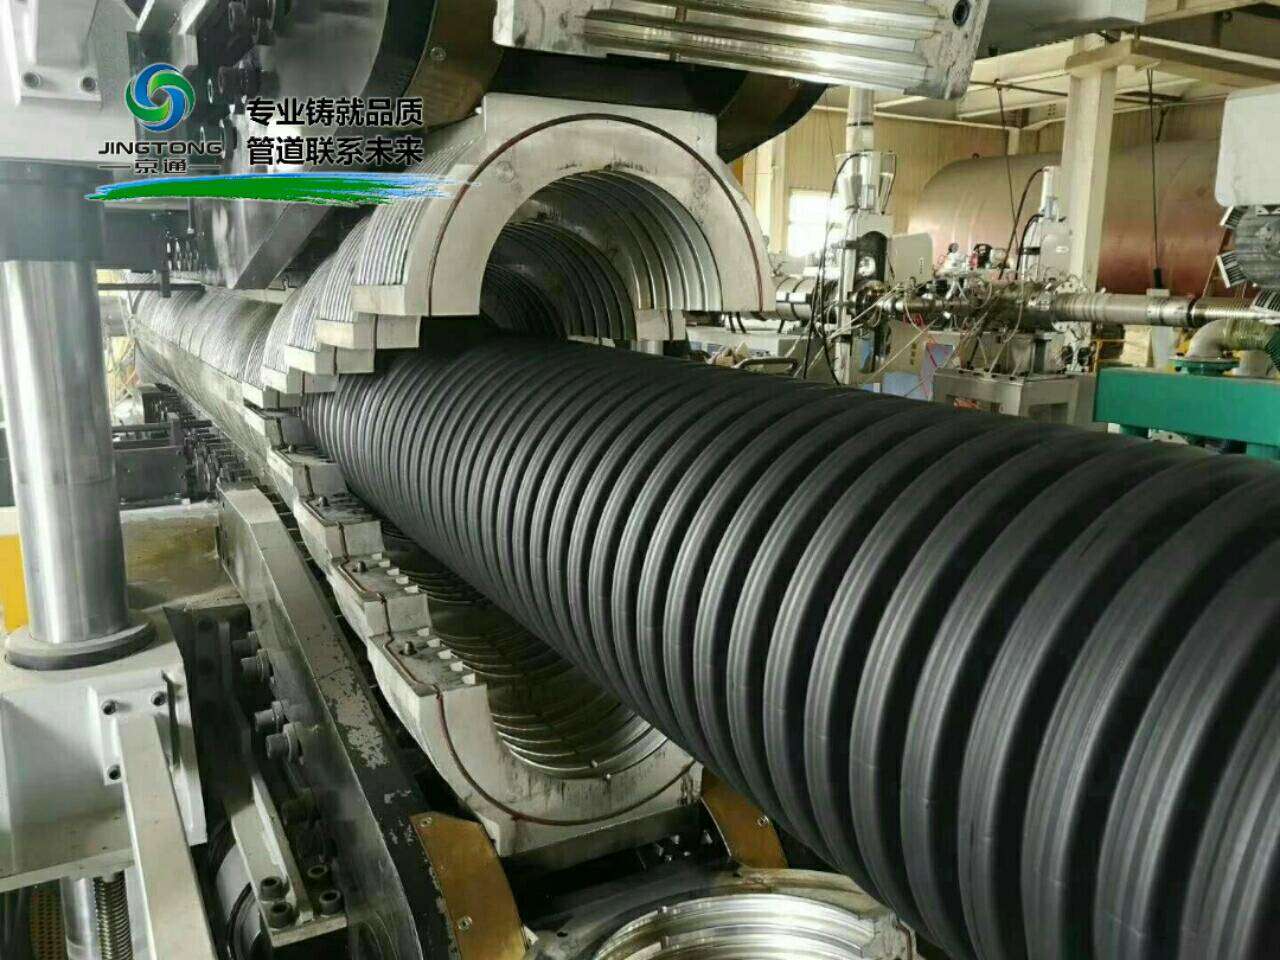 China hdpe pipe manufacturer